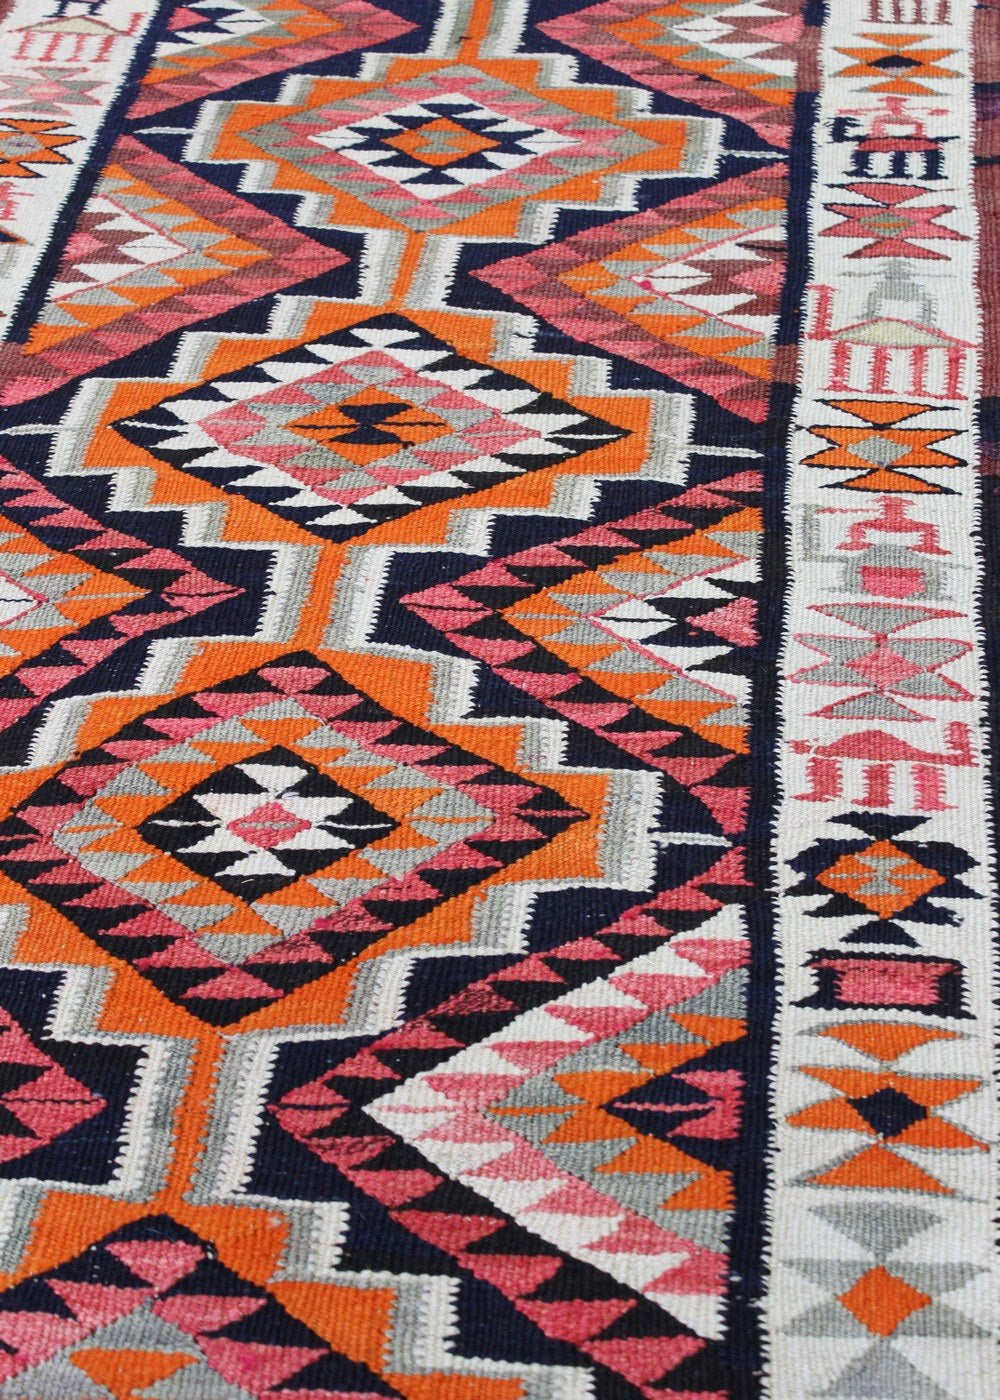 Vintage Herki Kilim Handwoven Tribal Rug, J67107